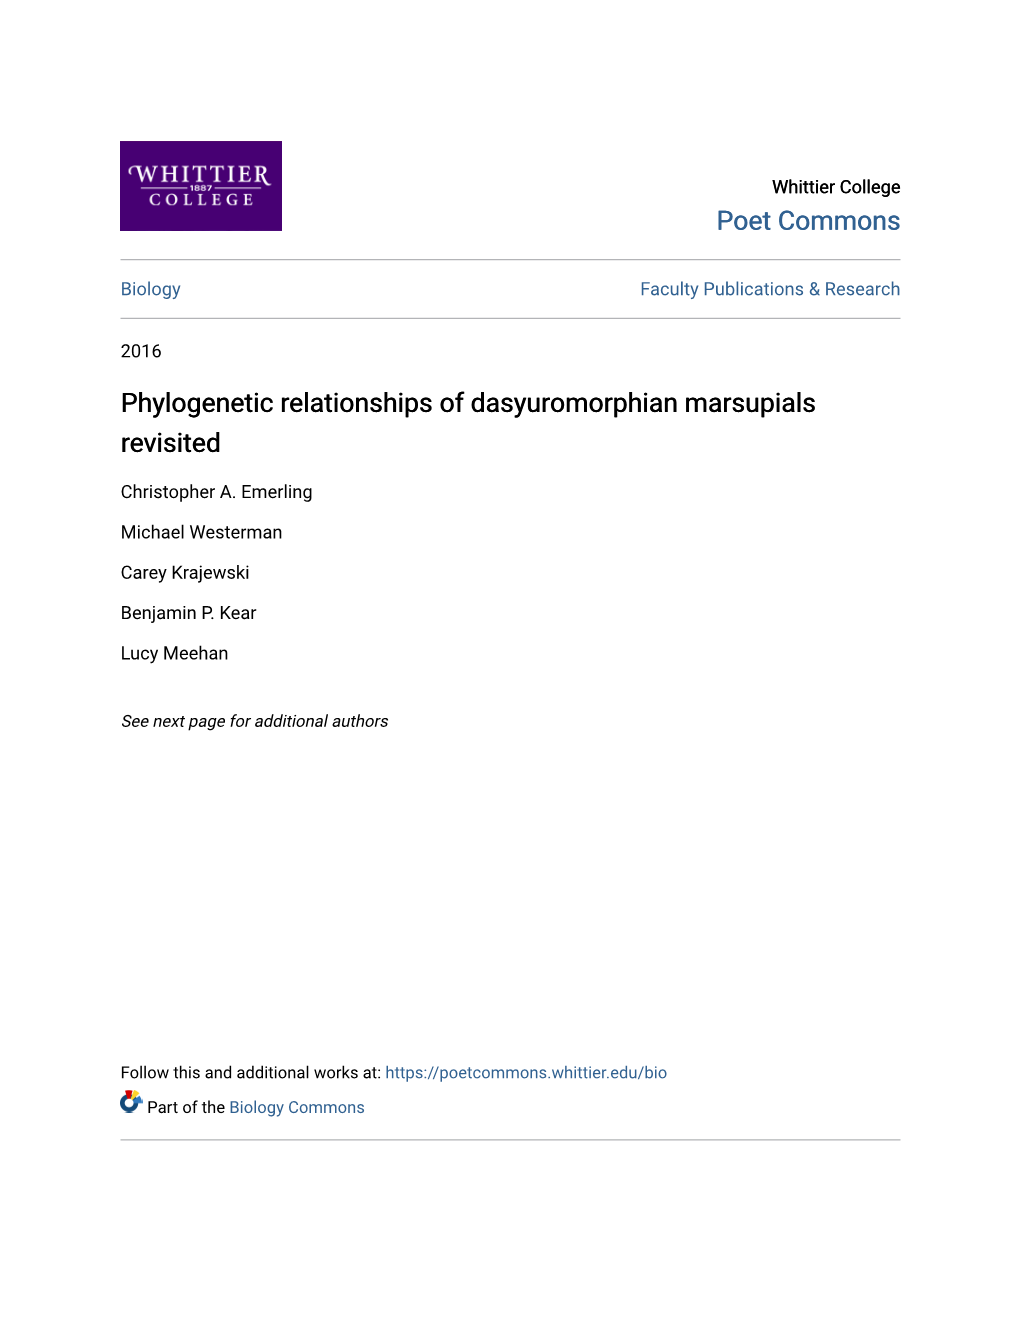 Phylogenetic Relationships of Dasyuromorphian Marsupials Revisited